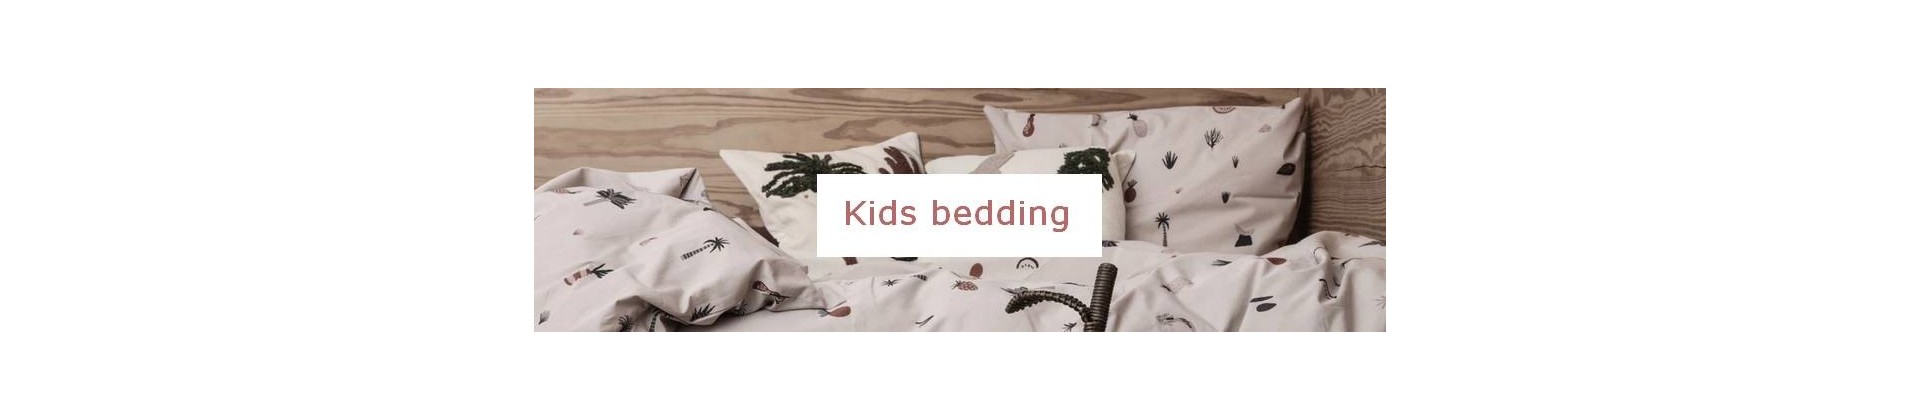 Kids bedding